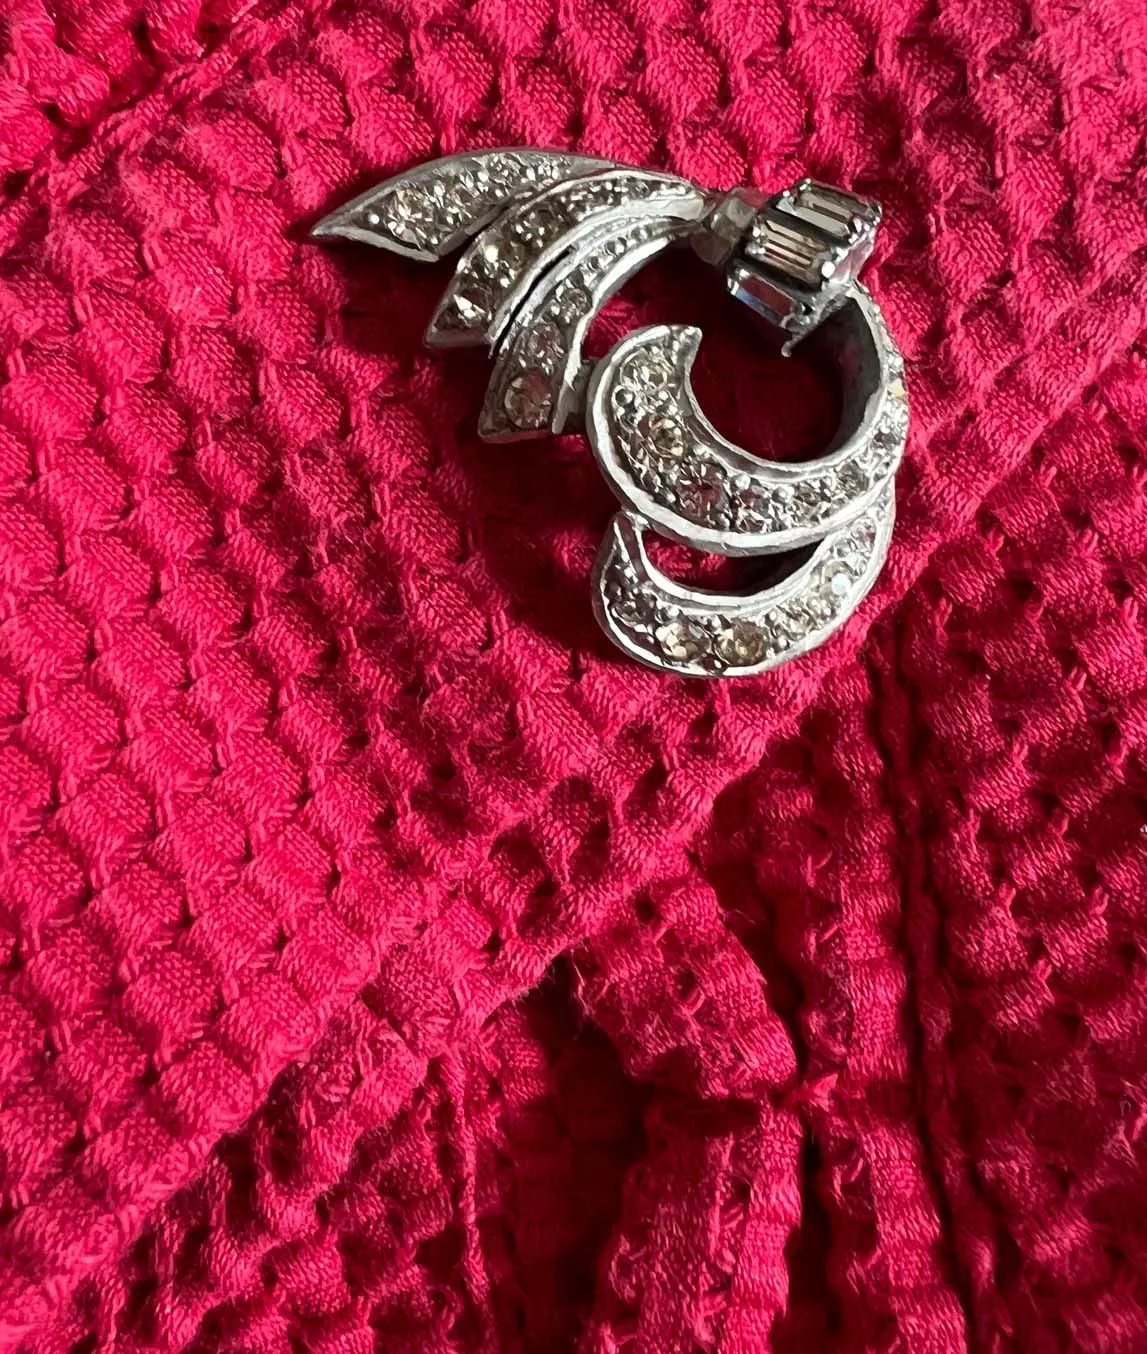 Art Deco dress clip worn on a pink jacket cuff